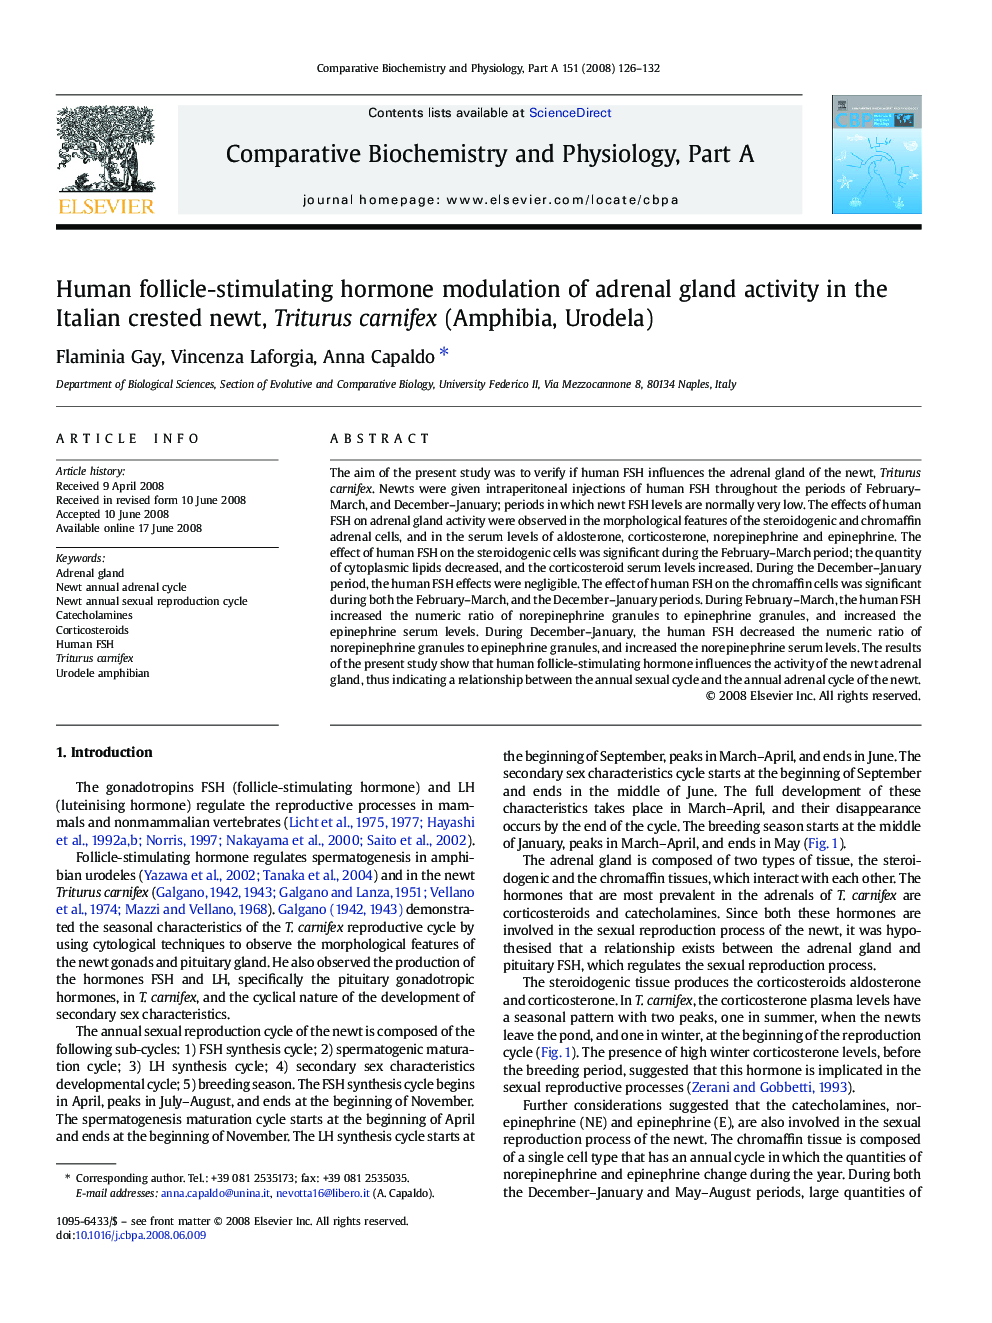 Human follicle-stimulating hormone modulation of adrenal gland activity in the Italian crested newt, Triturus carnifex (Amphibia, Urodela)